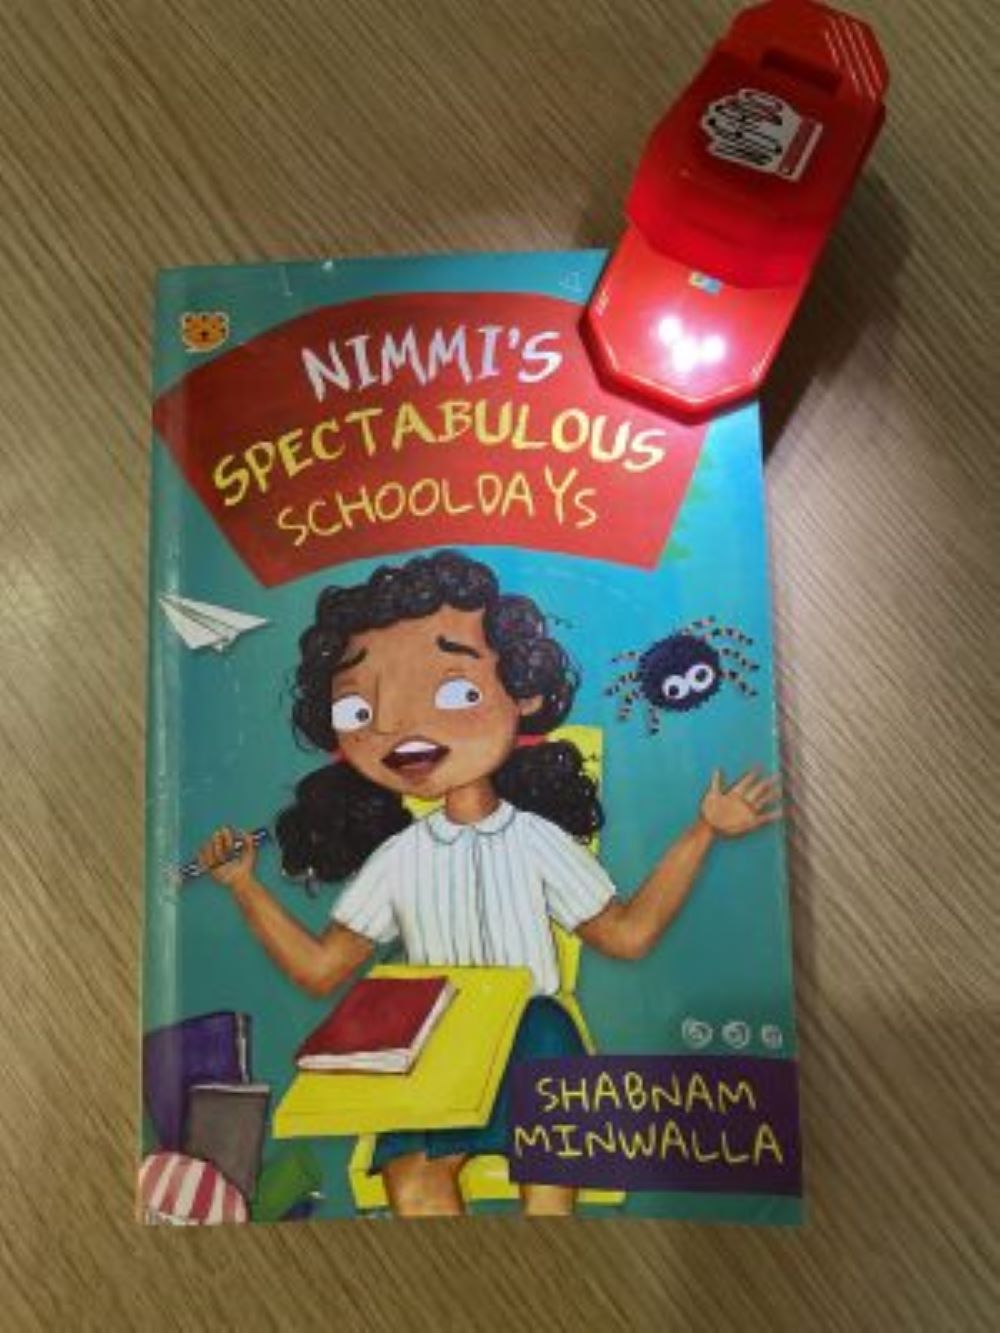 Review: Nimmi’s Spectabulous Schooldays